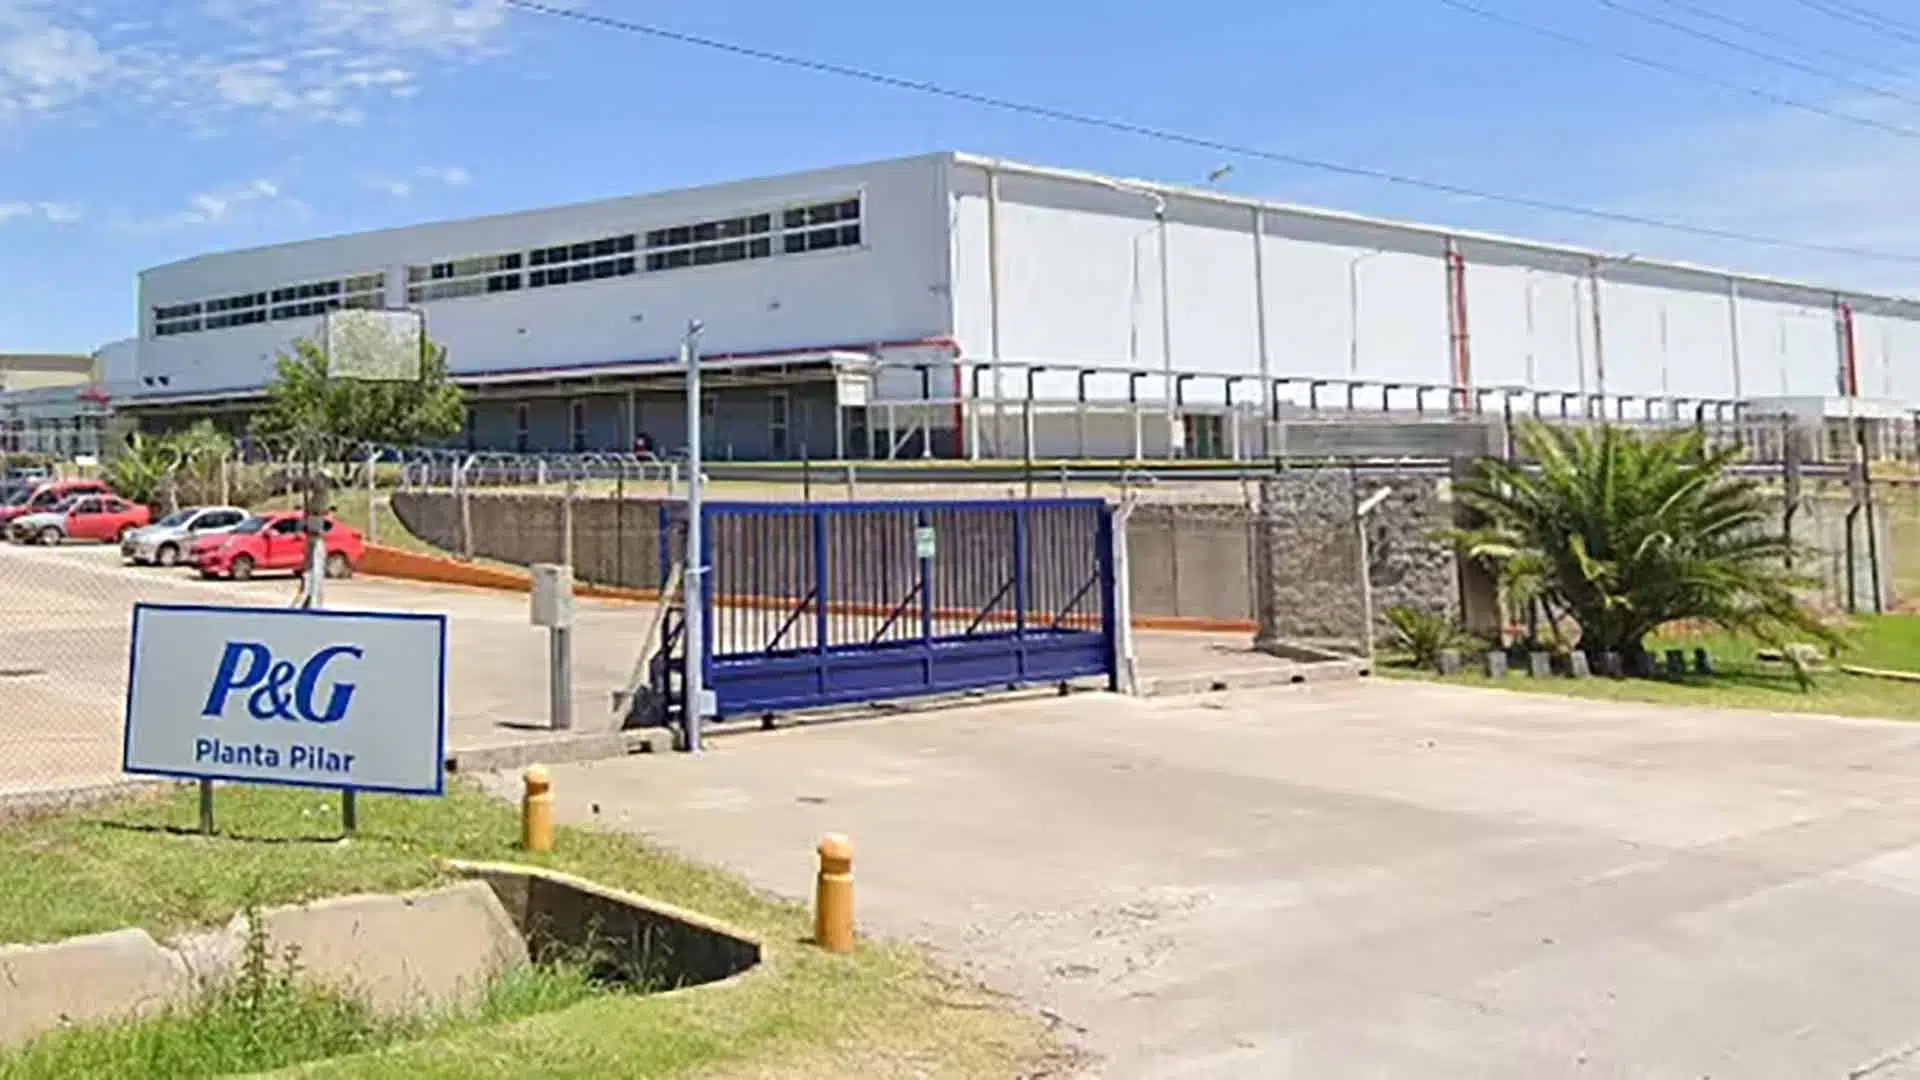 PyG Parque Industrial Pilar